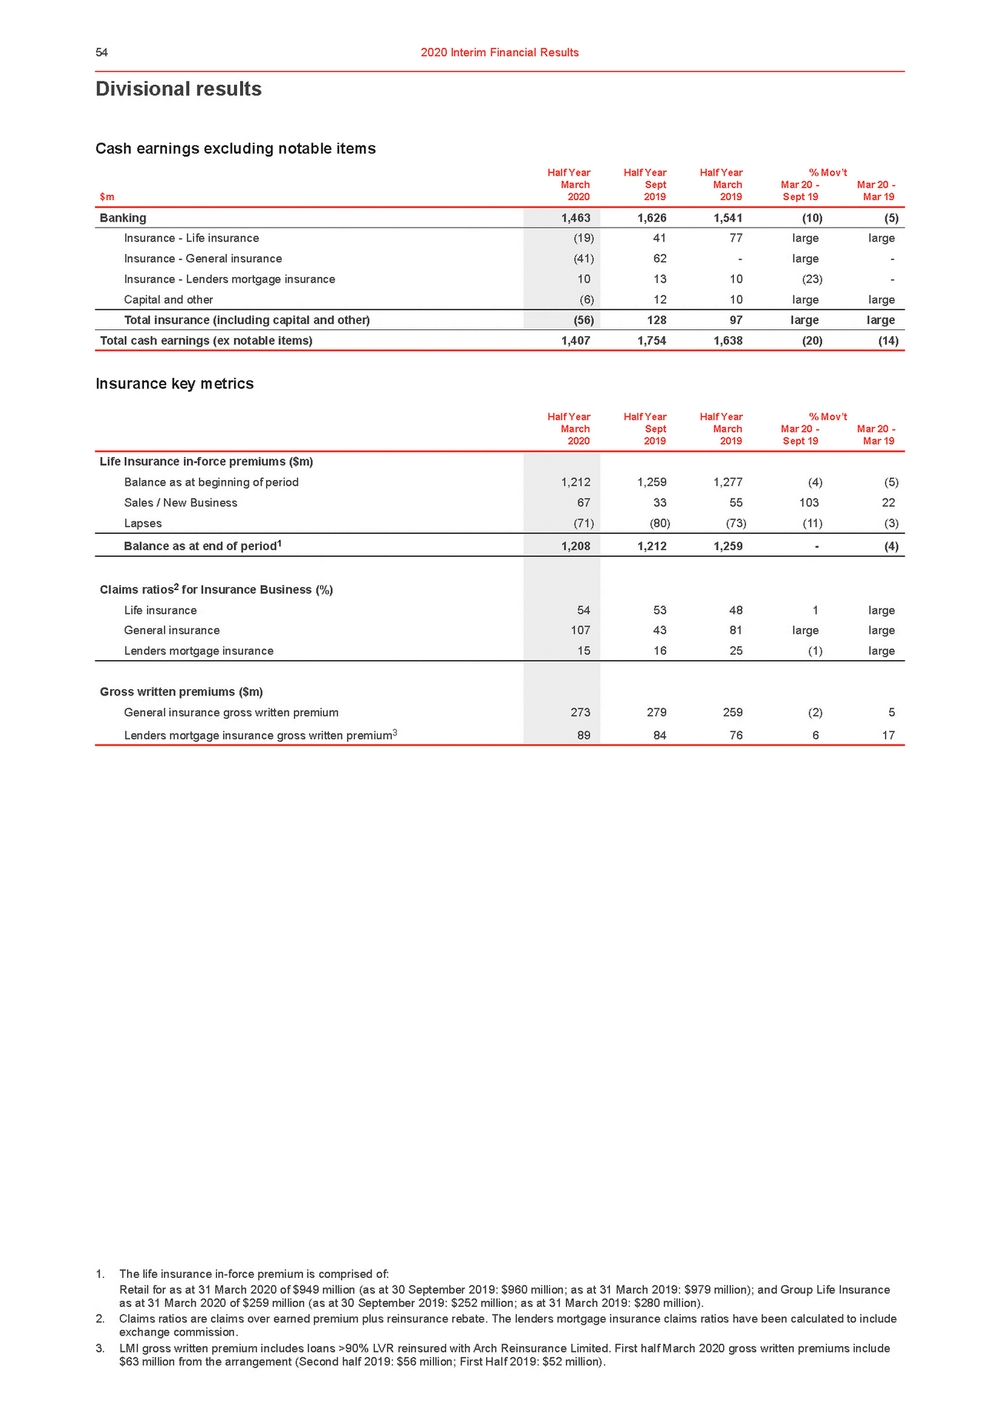 11676-3-ex1_westpac 2020 interim financial results announcement_page_059.jpg